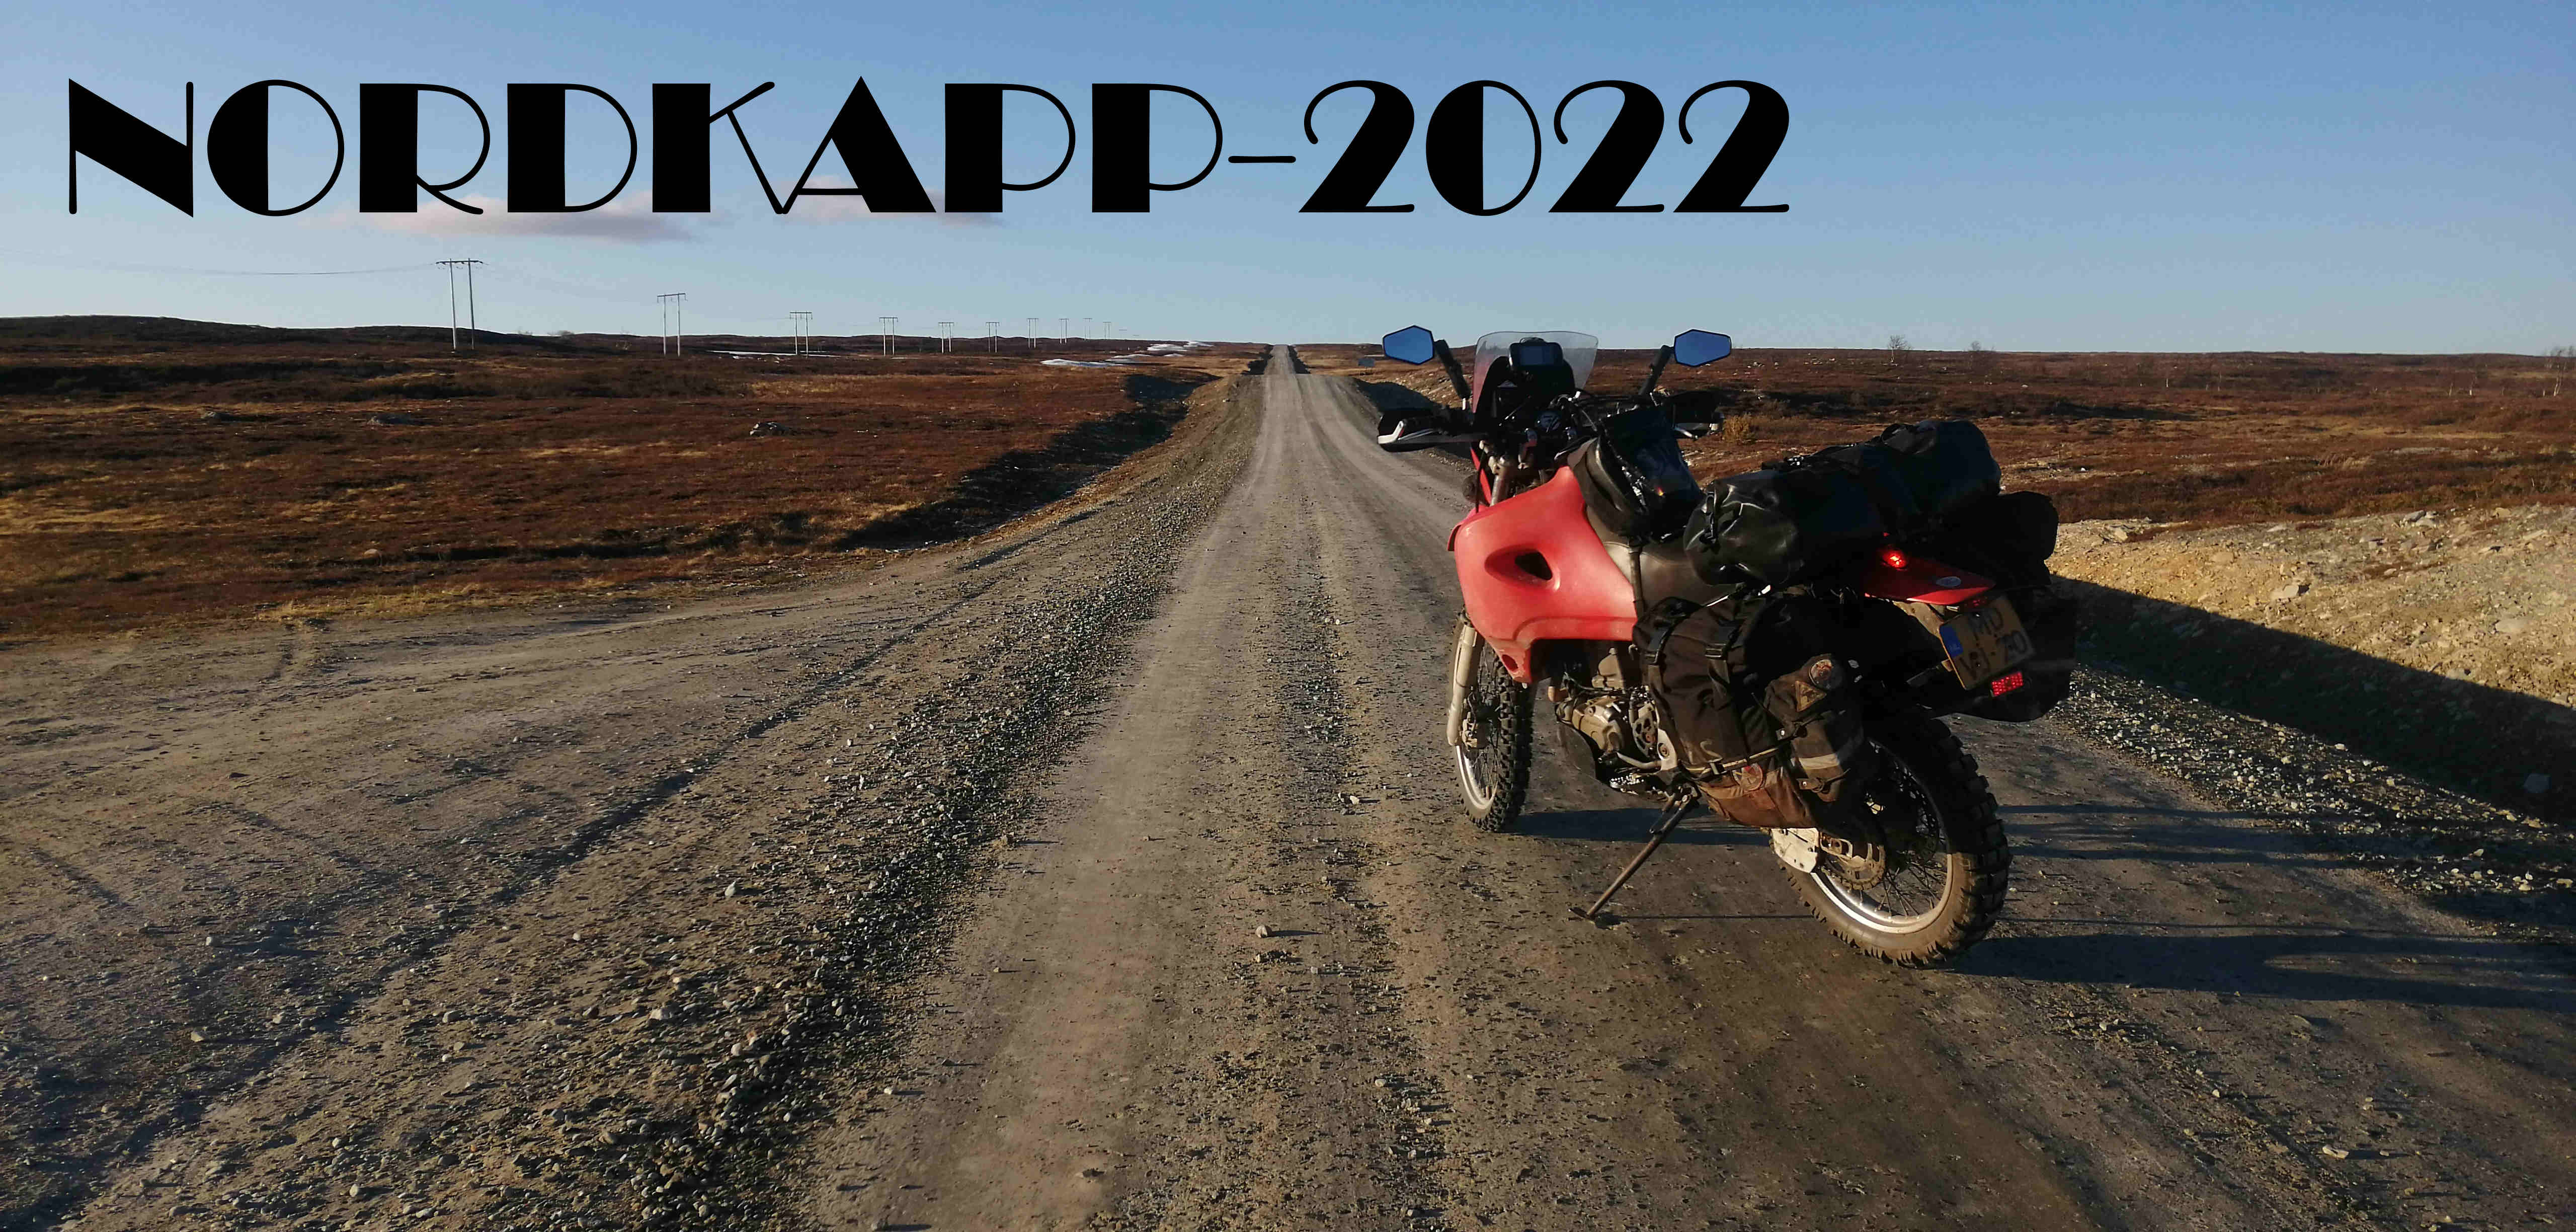 nordkapp-2022